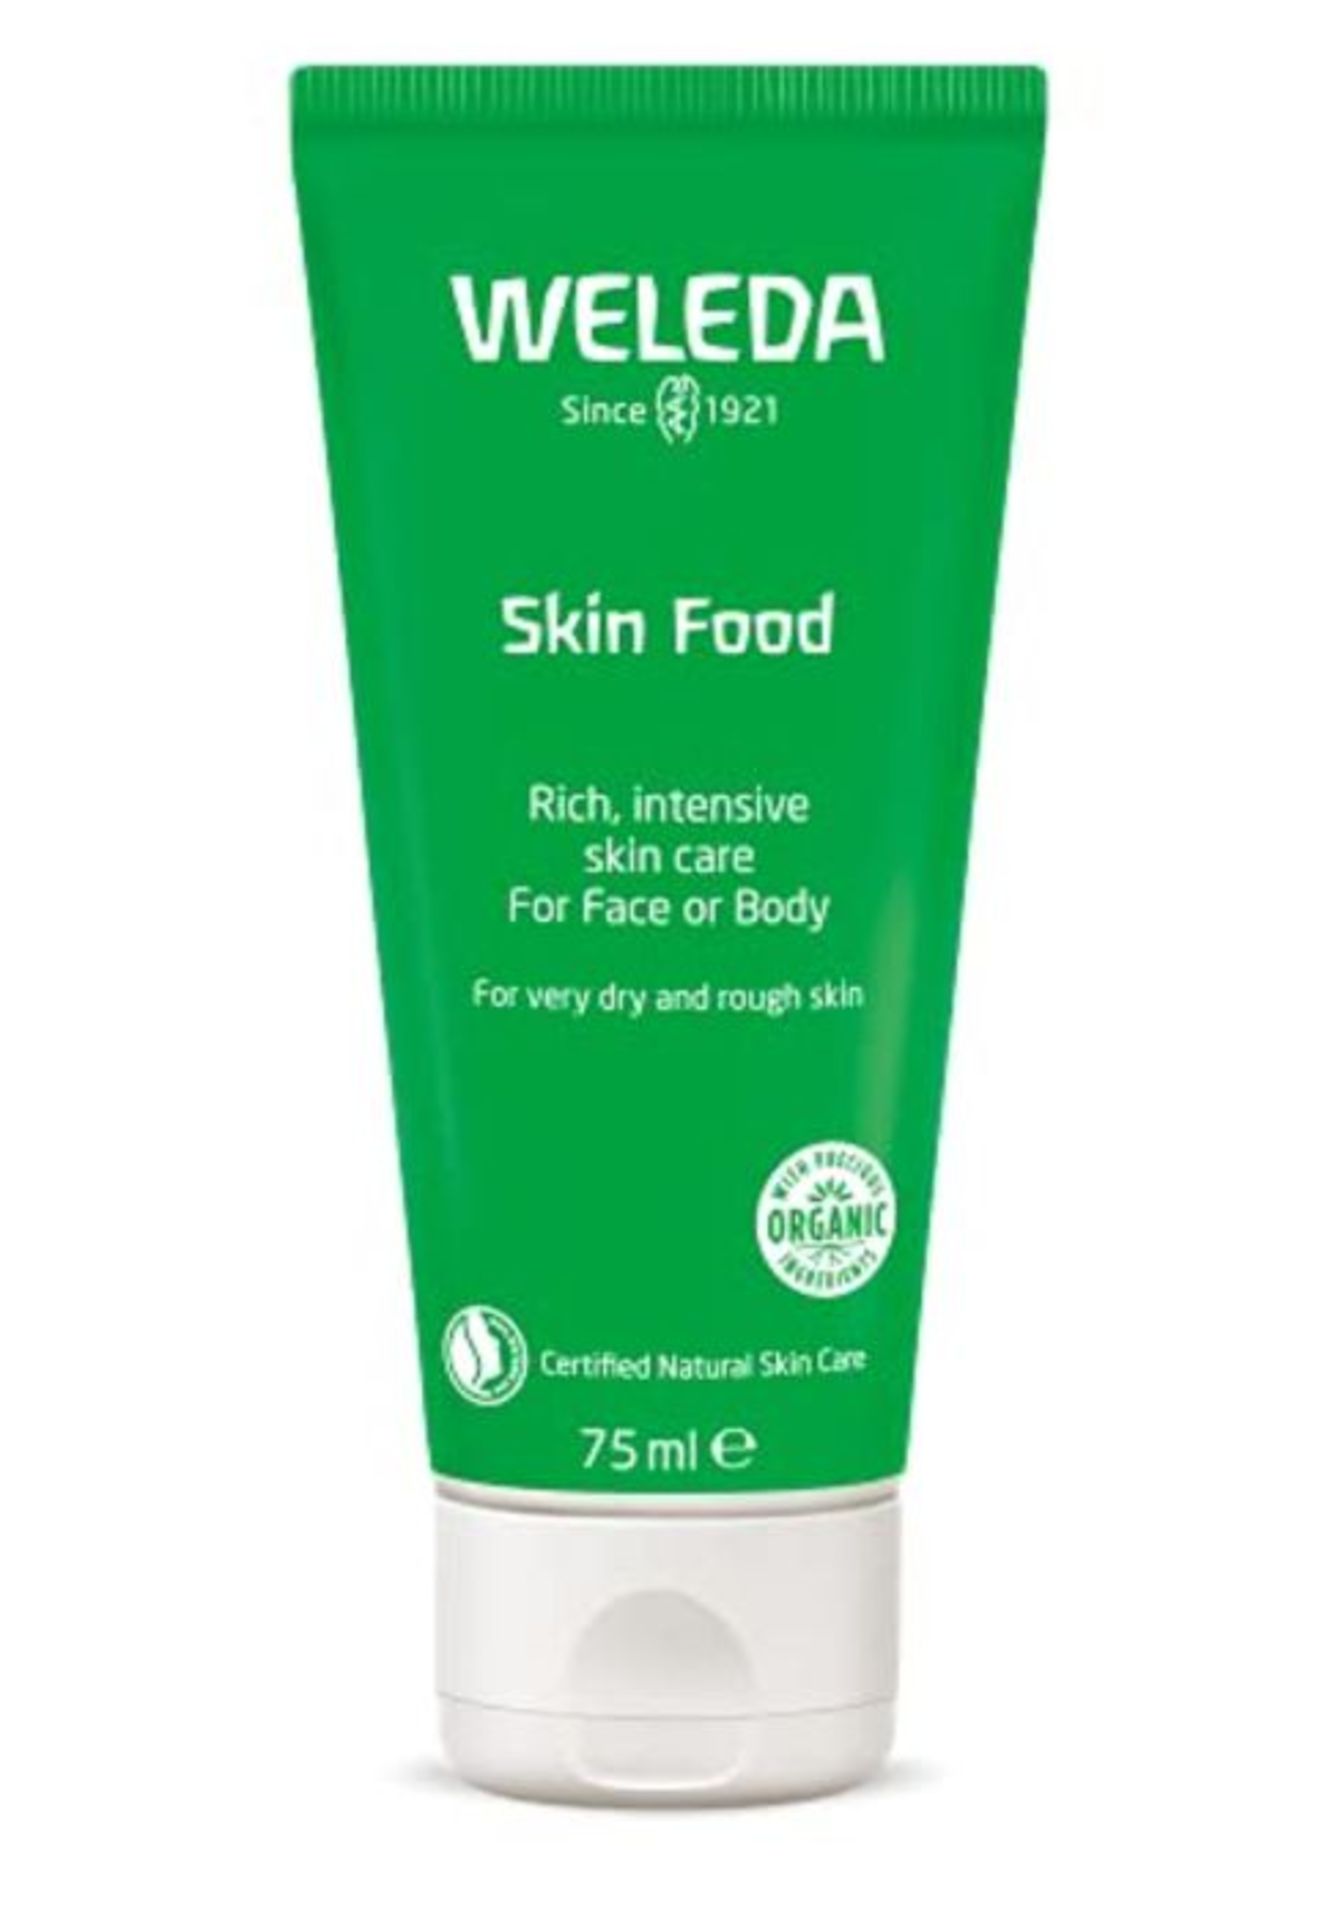 Weleda Skin Food for Dry and Rough skin, 75ml